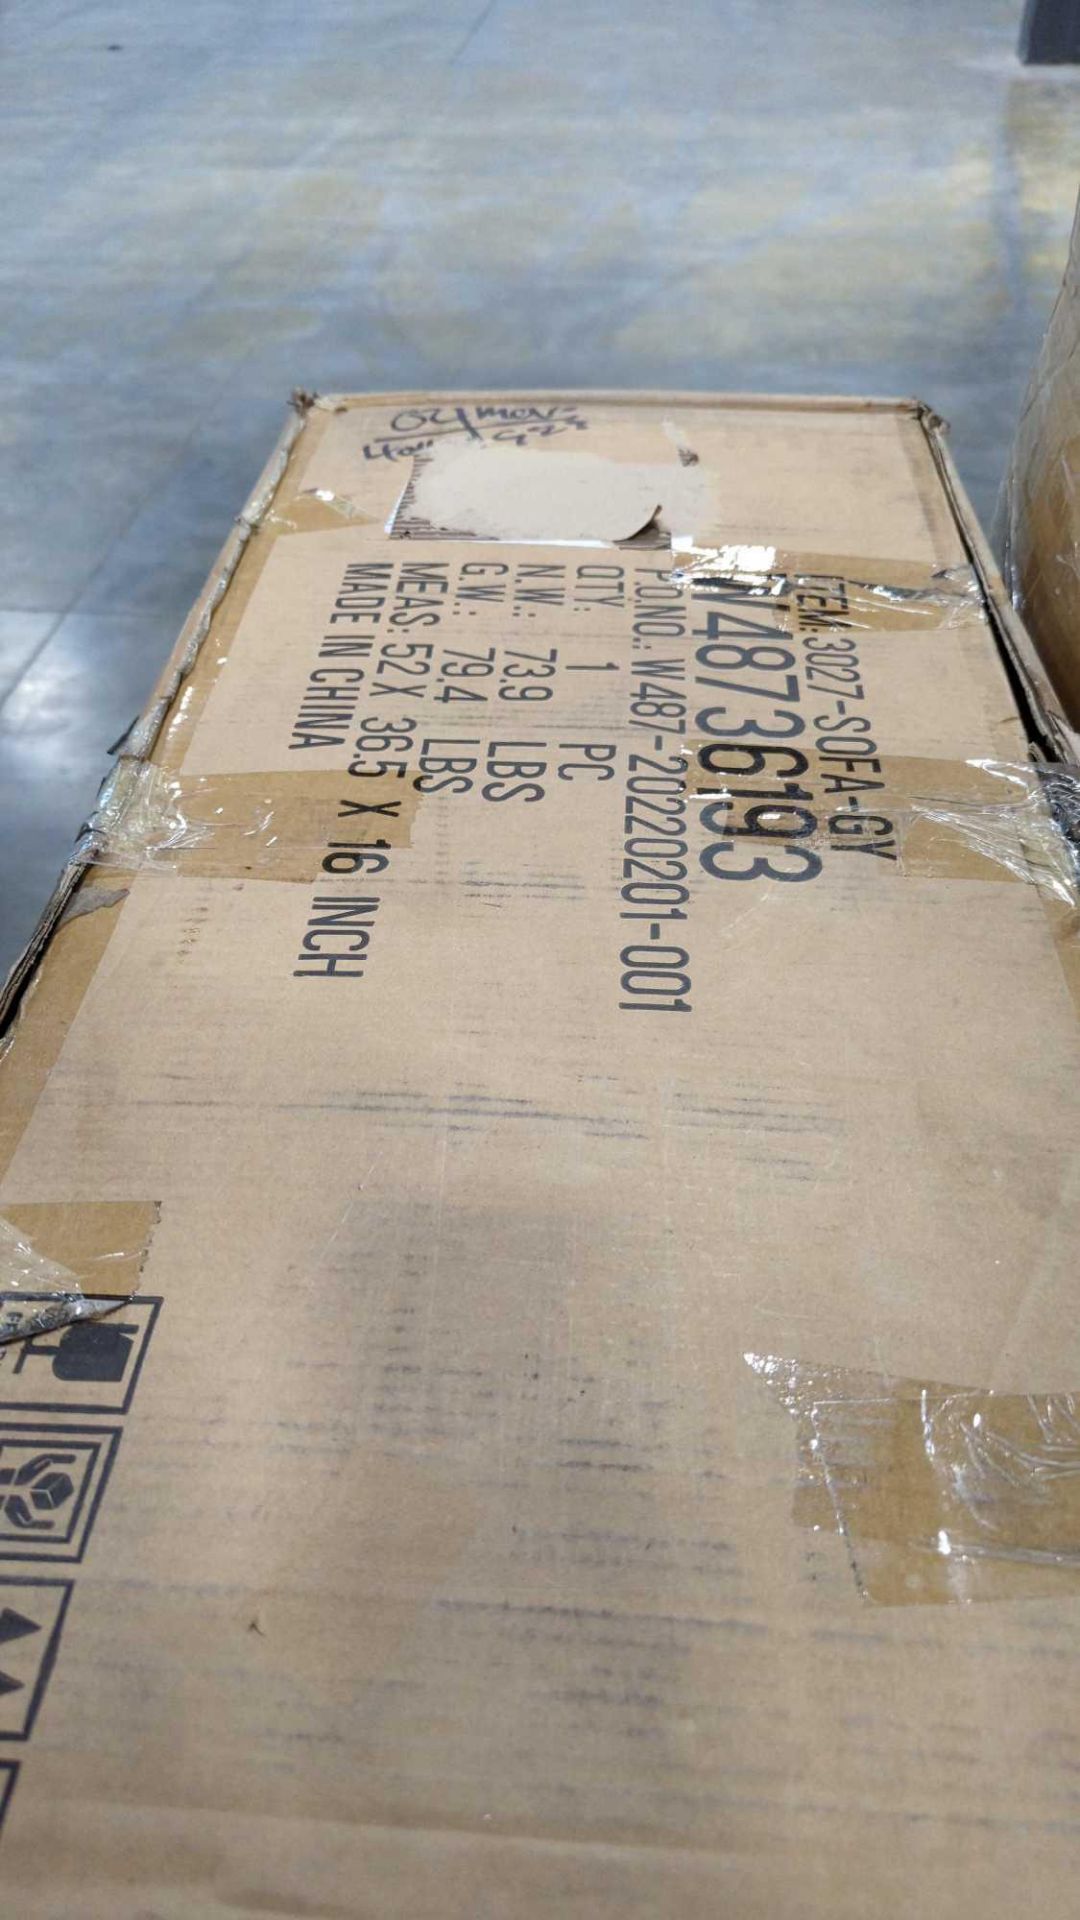 brb linq cargo box/mattress - Image 5 of 18